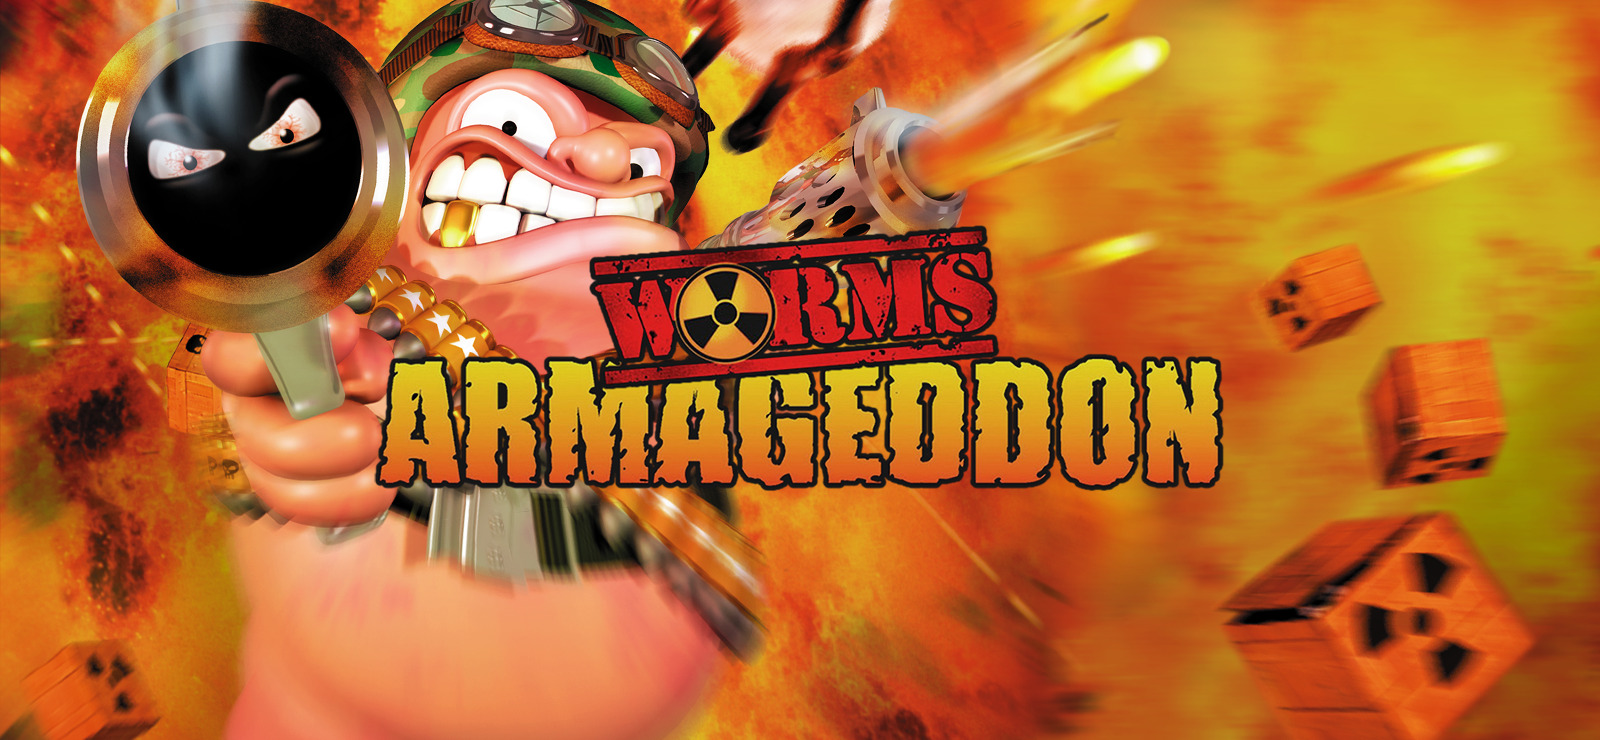 85% Worms: Армагеддон на GOG.com